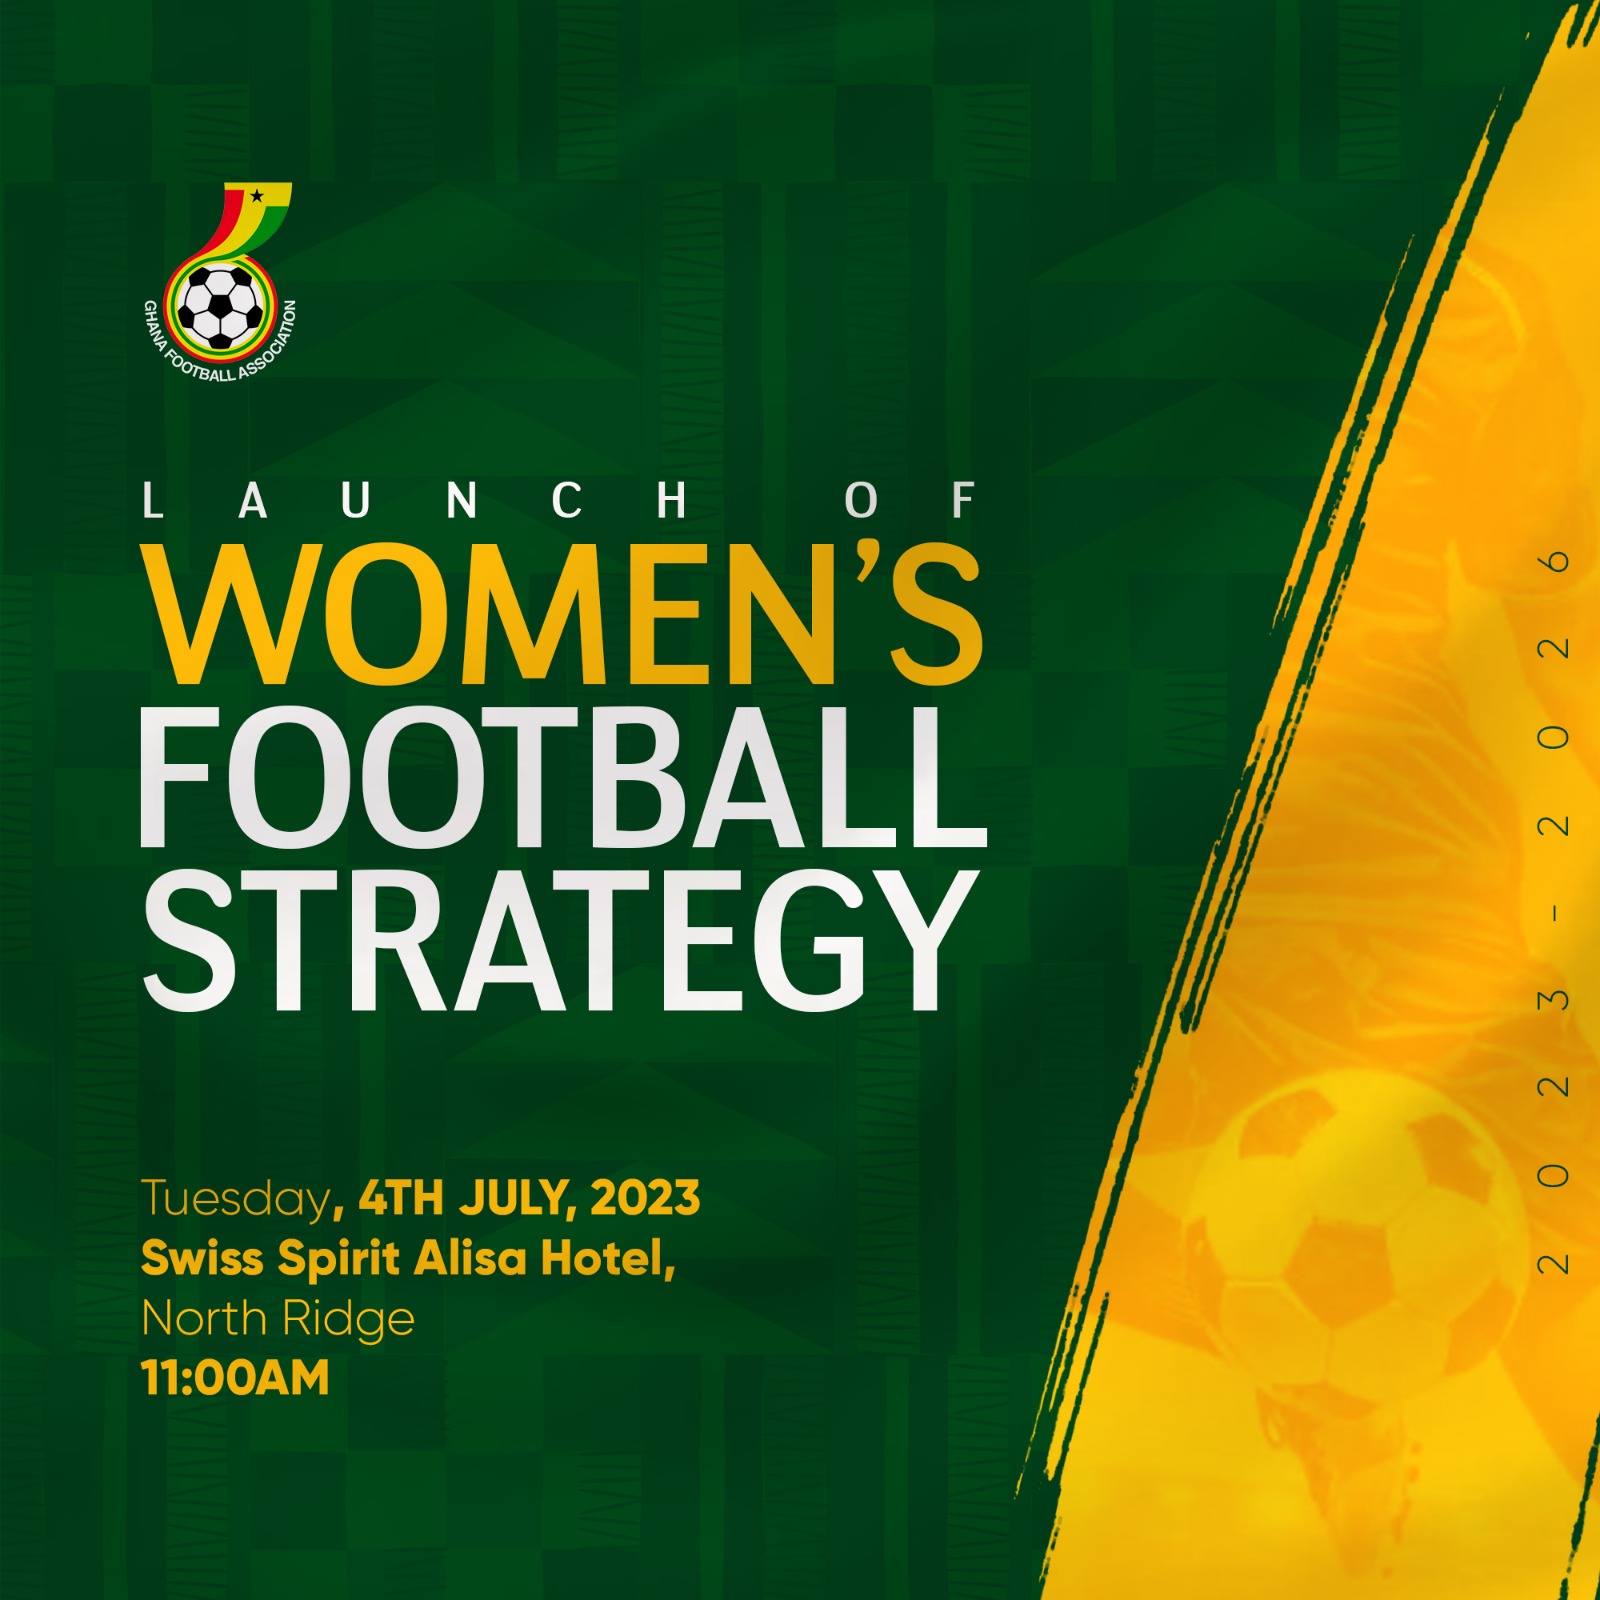 Women's Football Strategy launch July 4